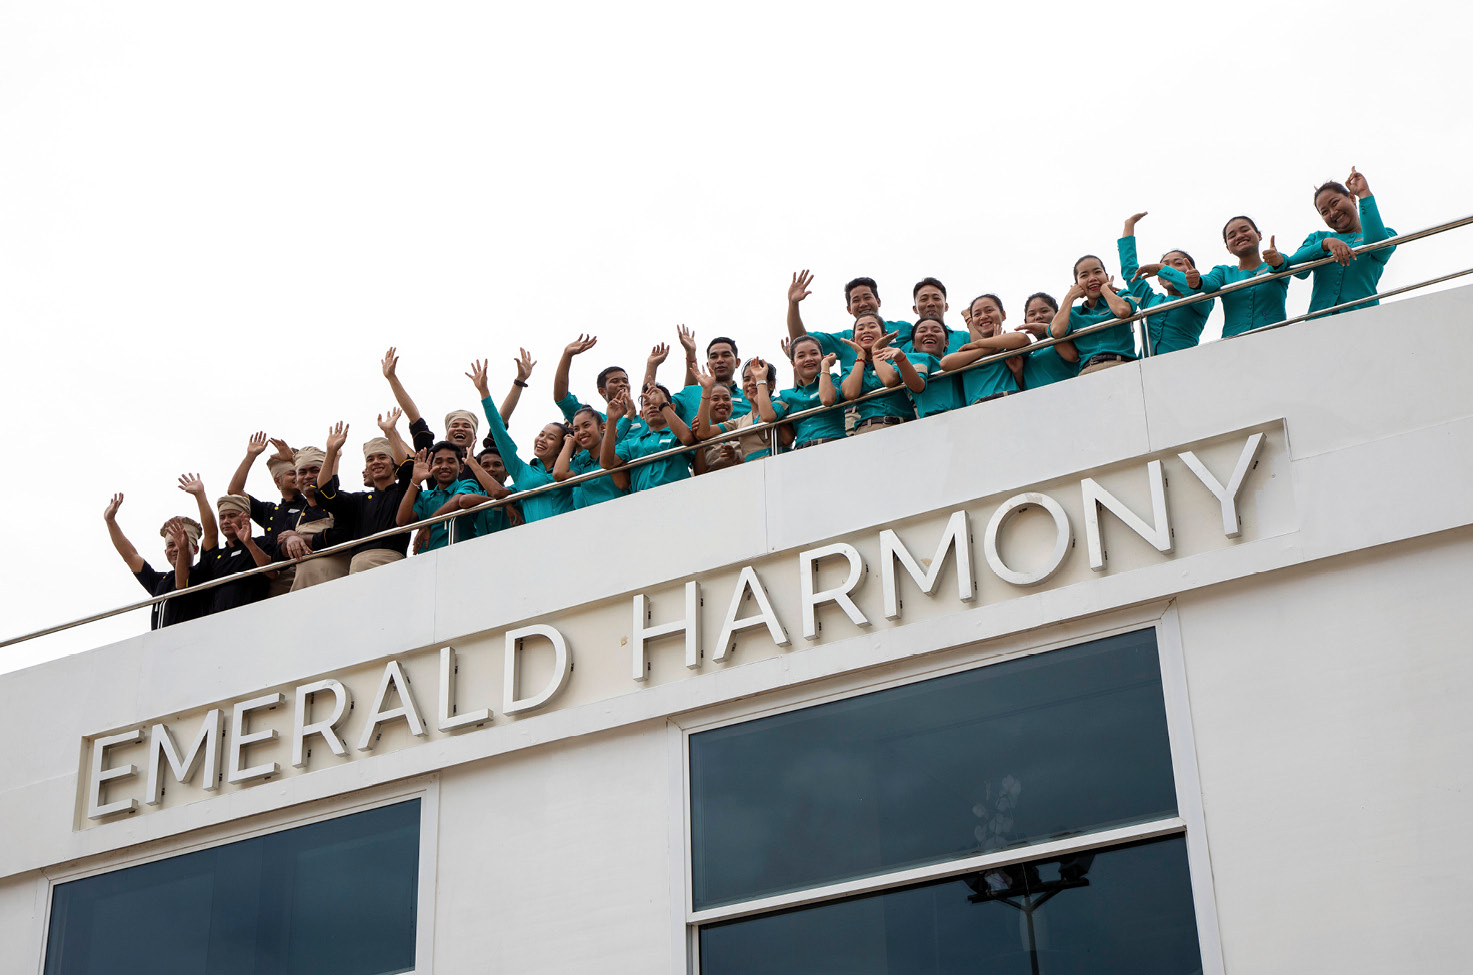 The crew on board Emerald Harmony, a luxury river cruise ship